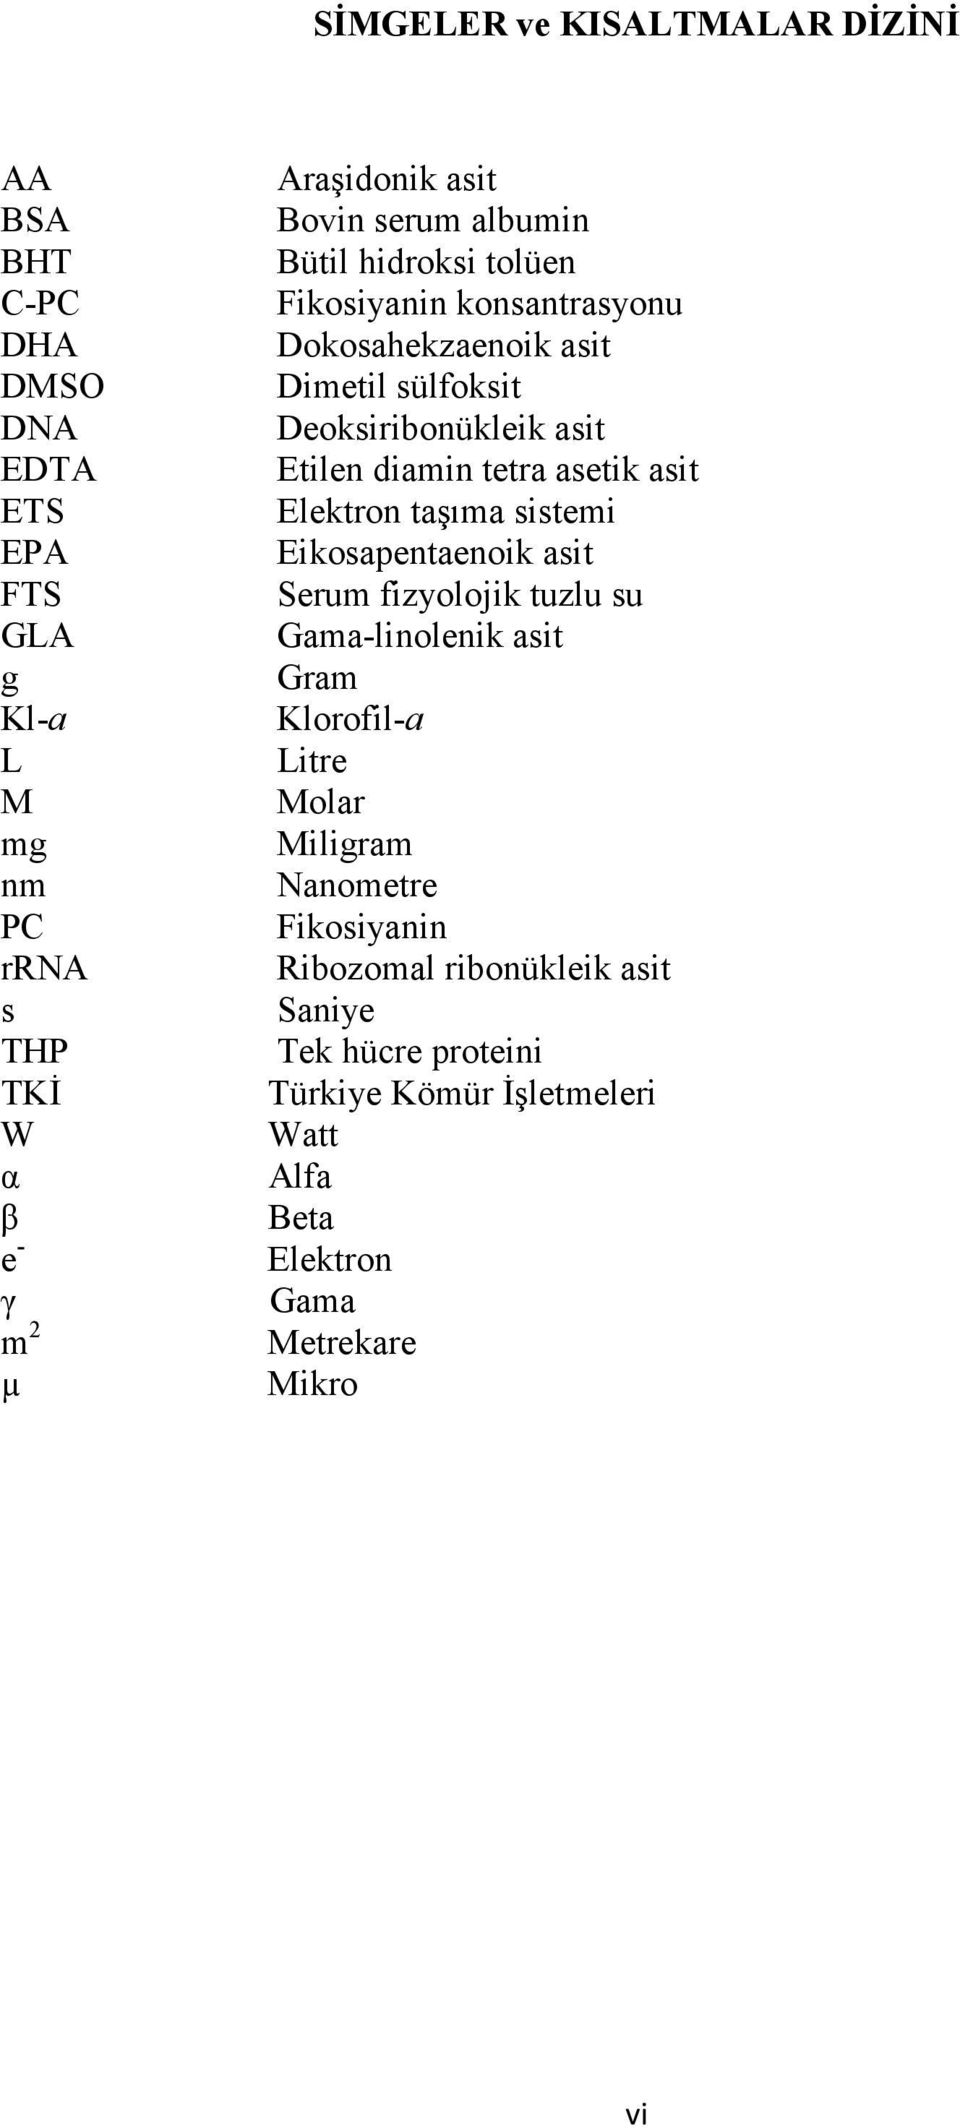 Eikosapentaenoik asit FTS Serum fizyolojik tuzlu su GLA Gama-linolenik asit g Gram Kl-a Klorofil-a L Litre M Molar mg Miligram nm Nanometre PC